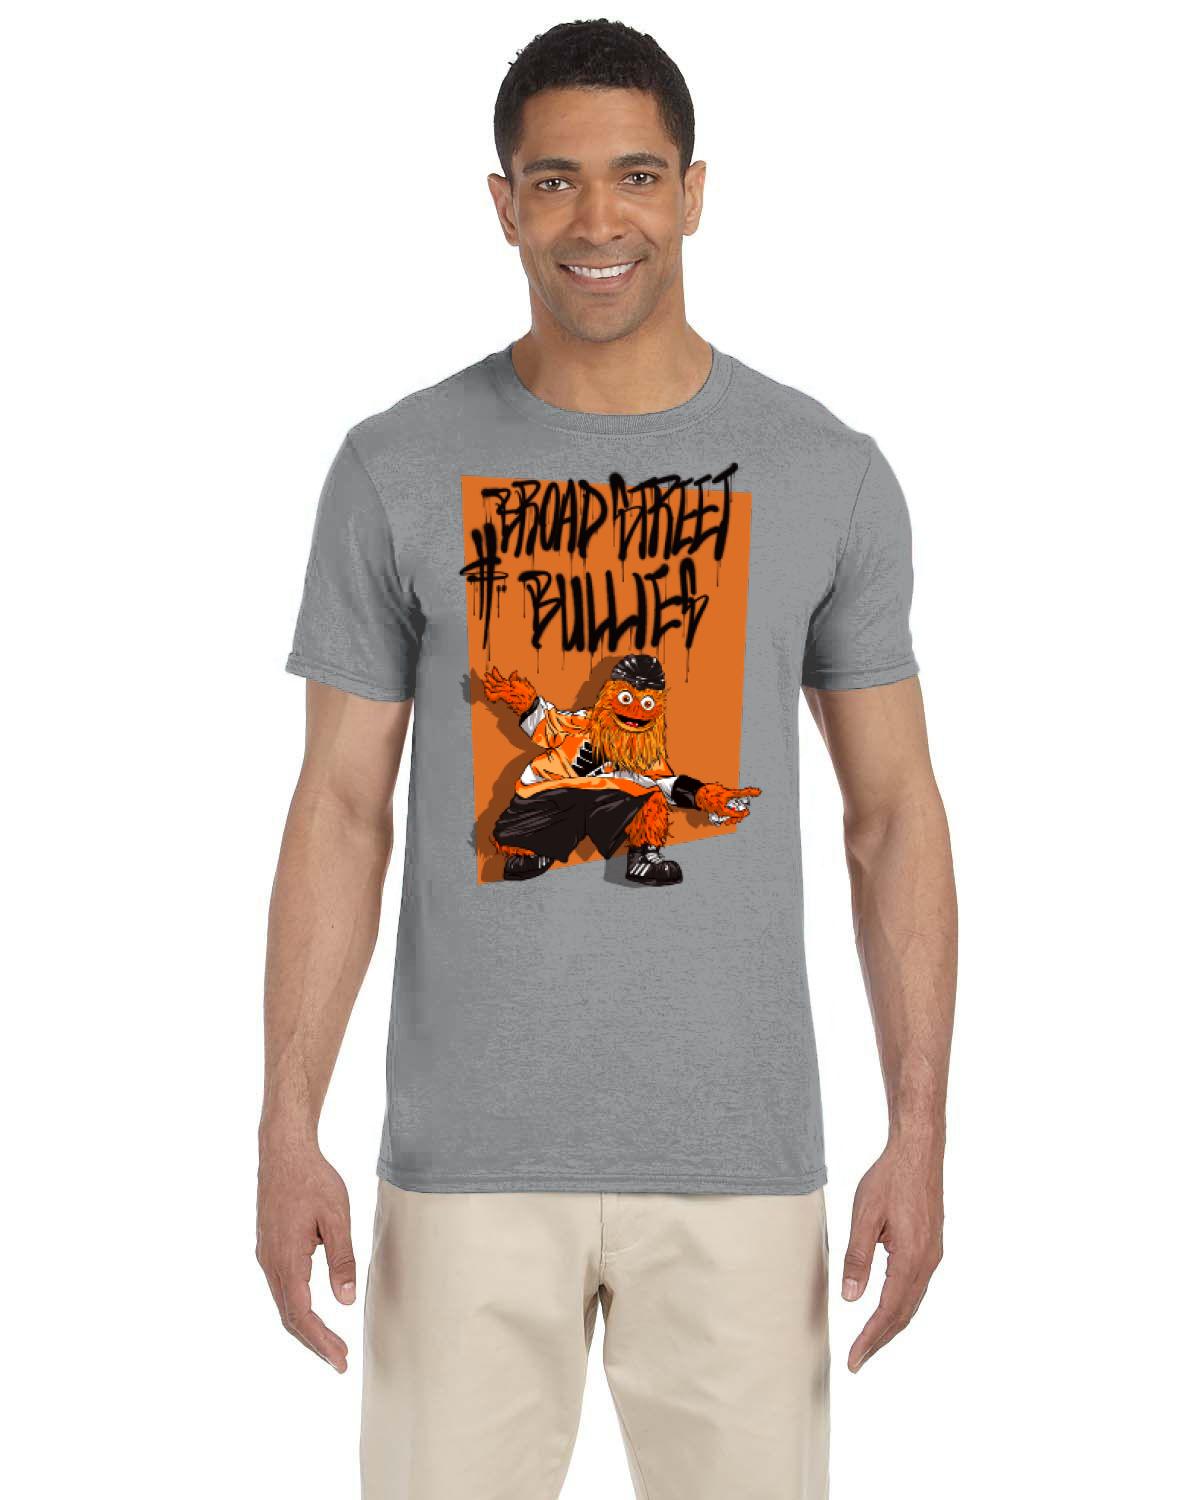 Broad Street Bullies Black Type Tee (Gildan Adult Softstyle 7.5 oz./lin. yd. T-Shirt | G640)